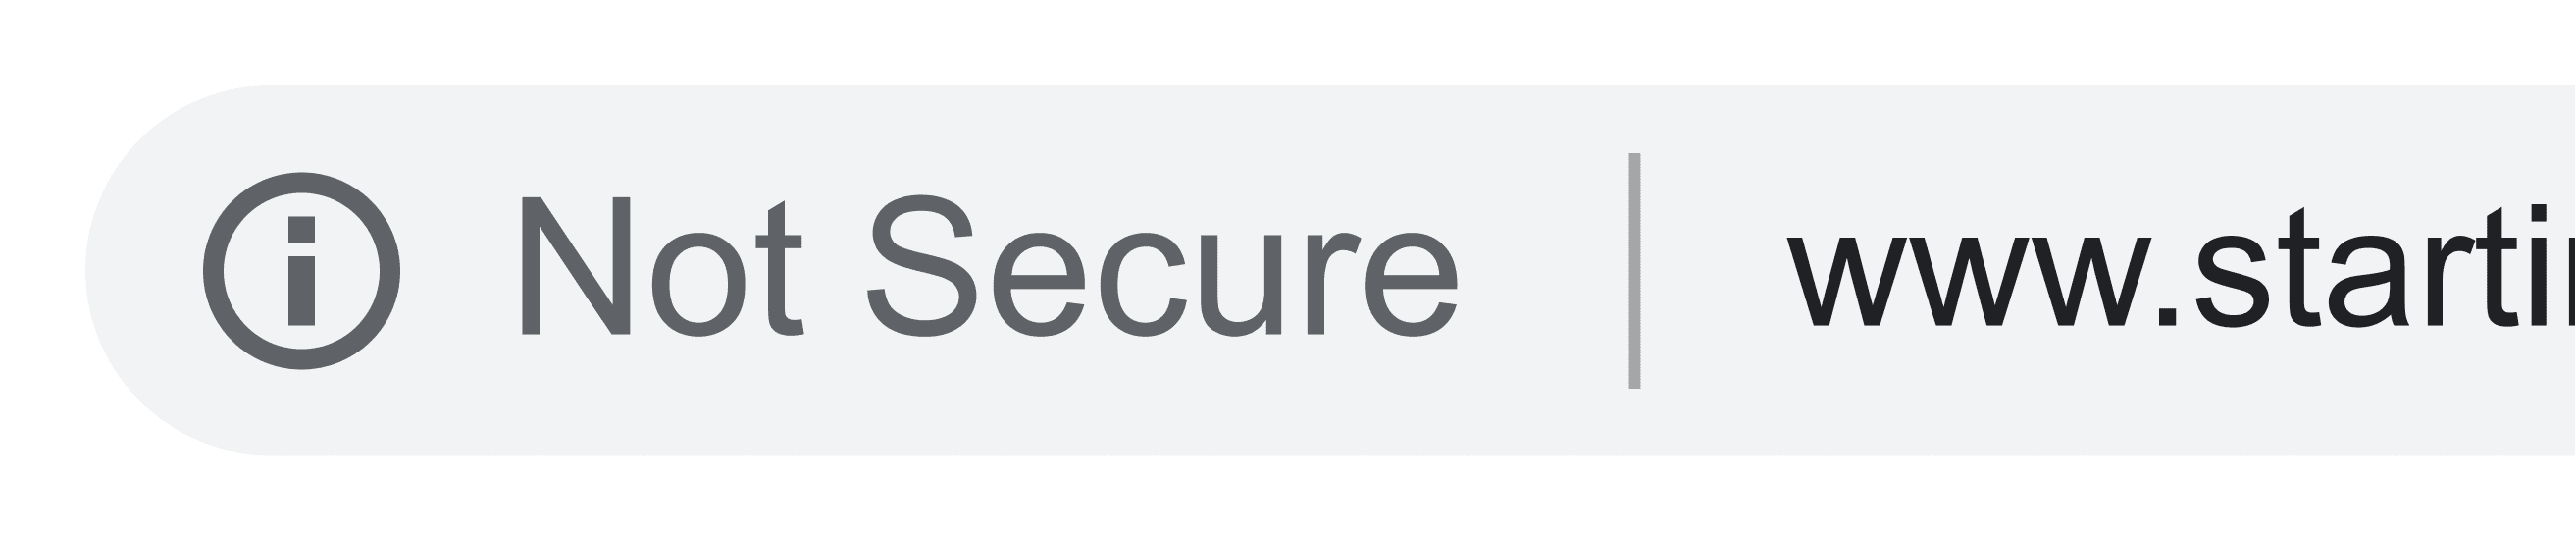 Not-secure website